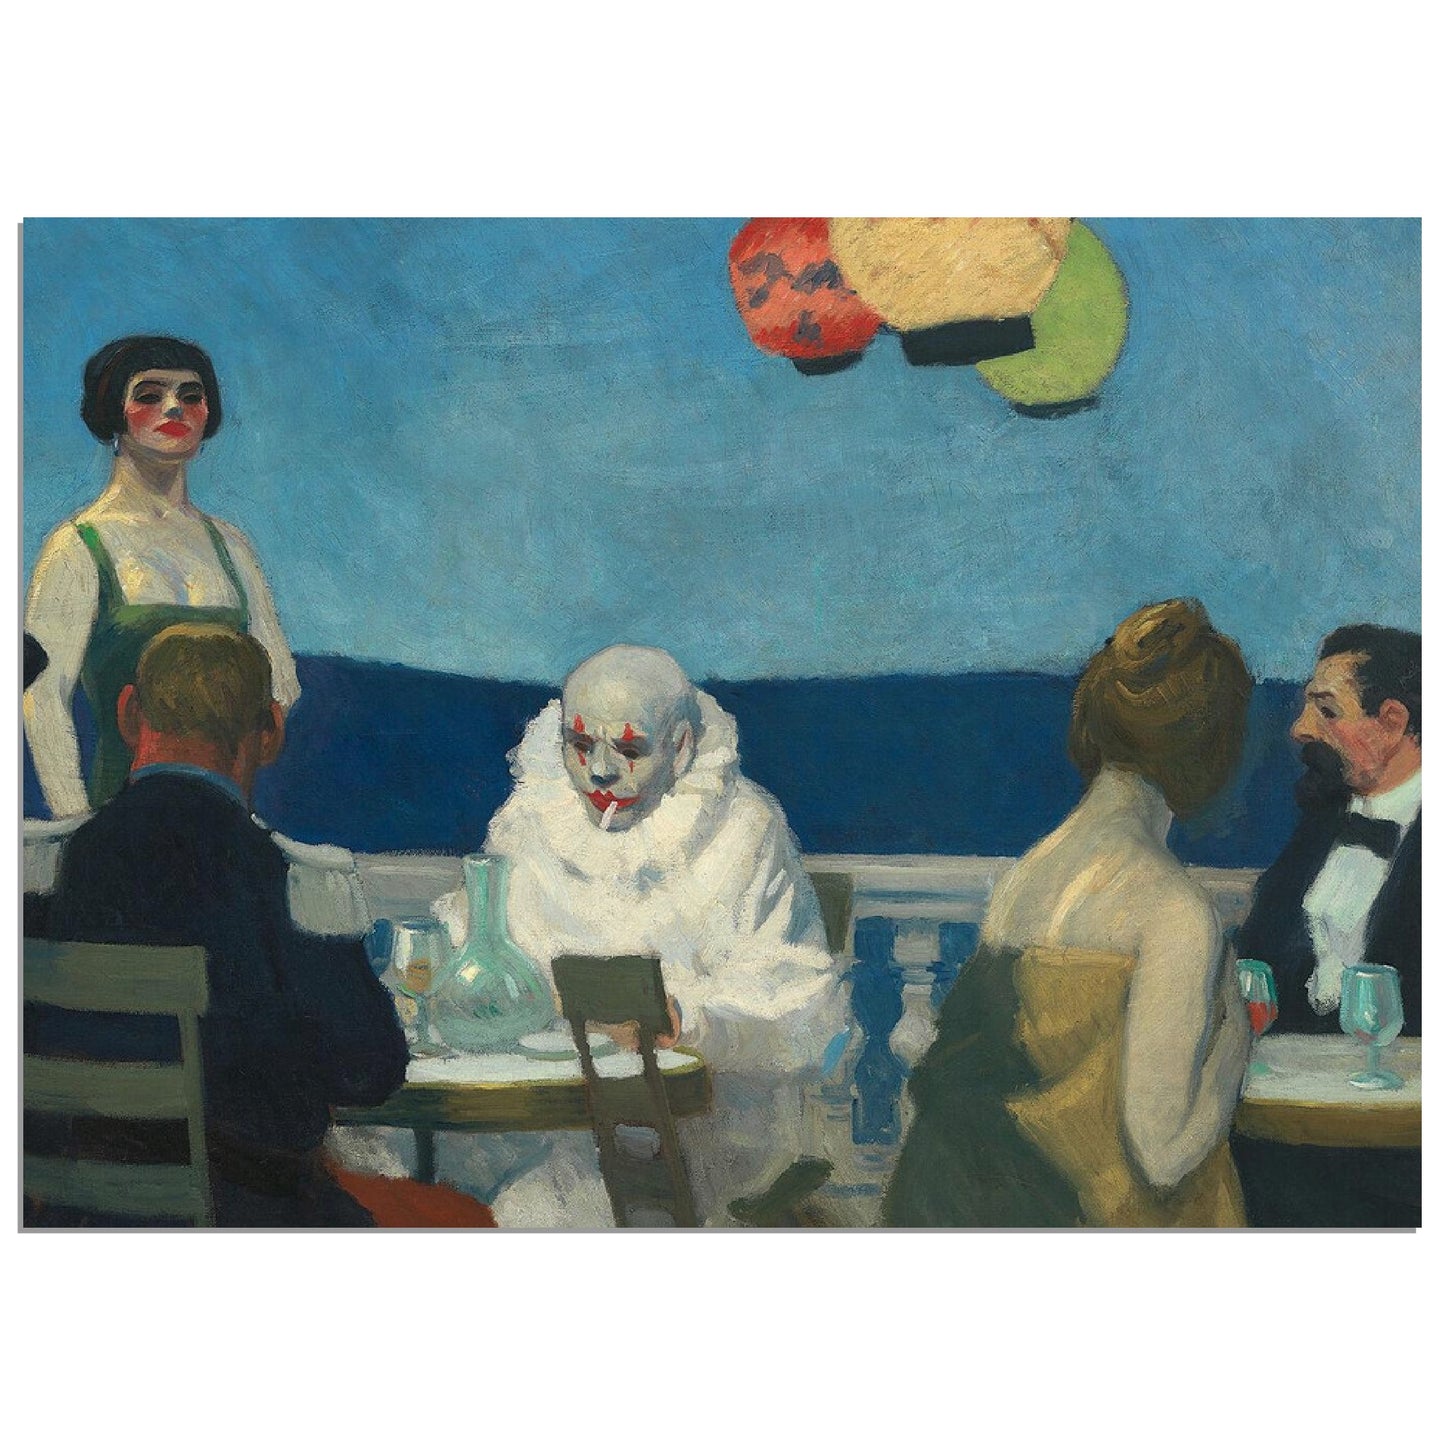 Soir Bleu by Edward Hopper (1914)